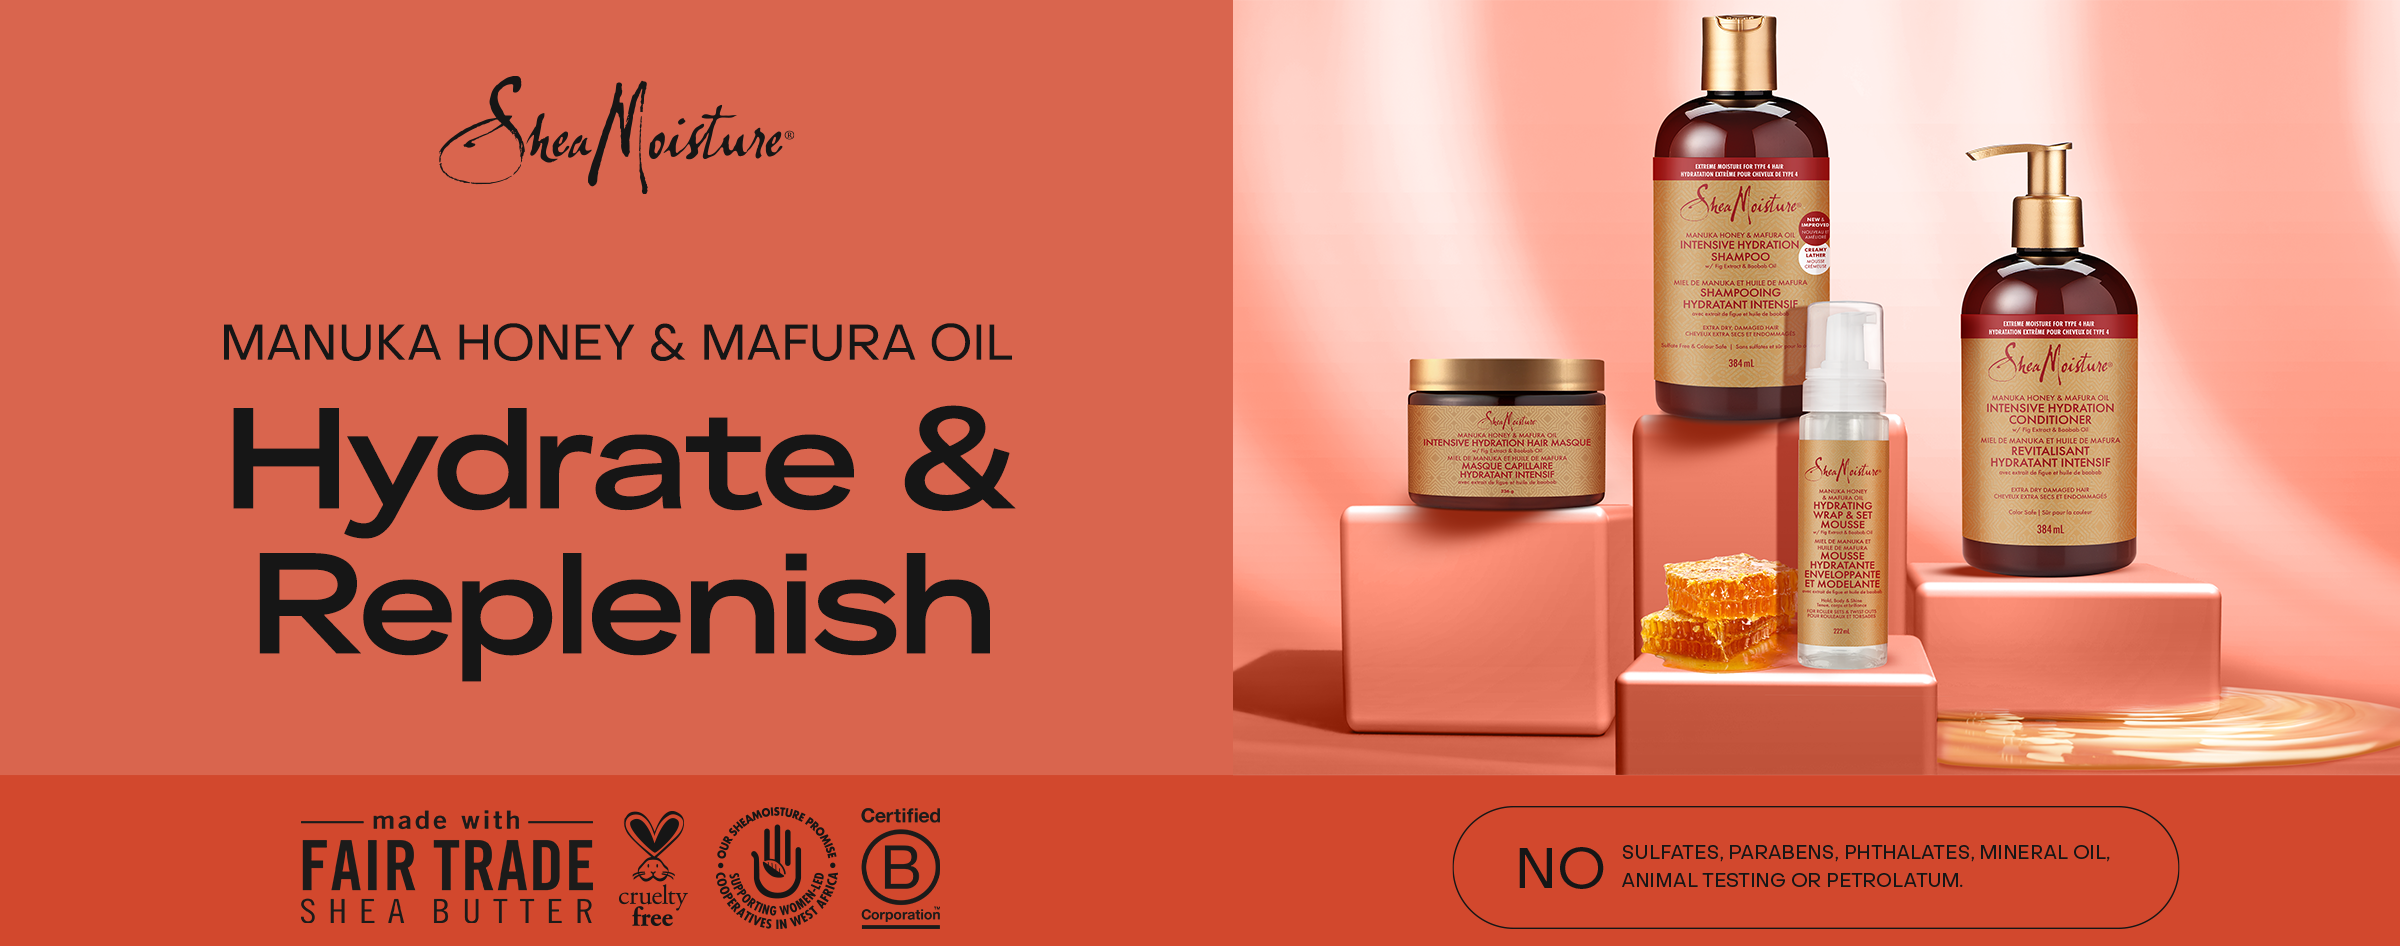 Manuka honey mafura oil Collection